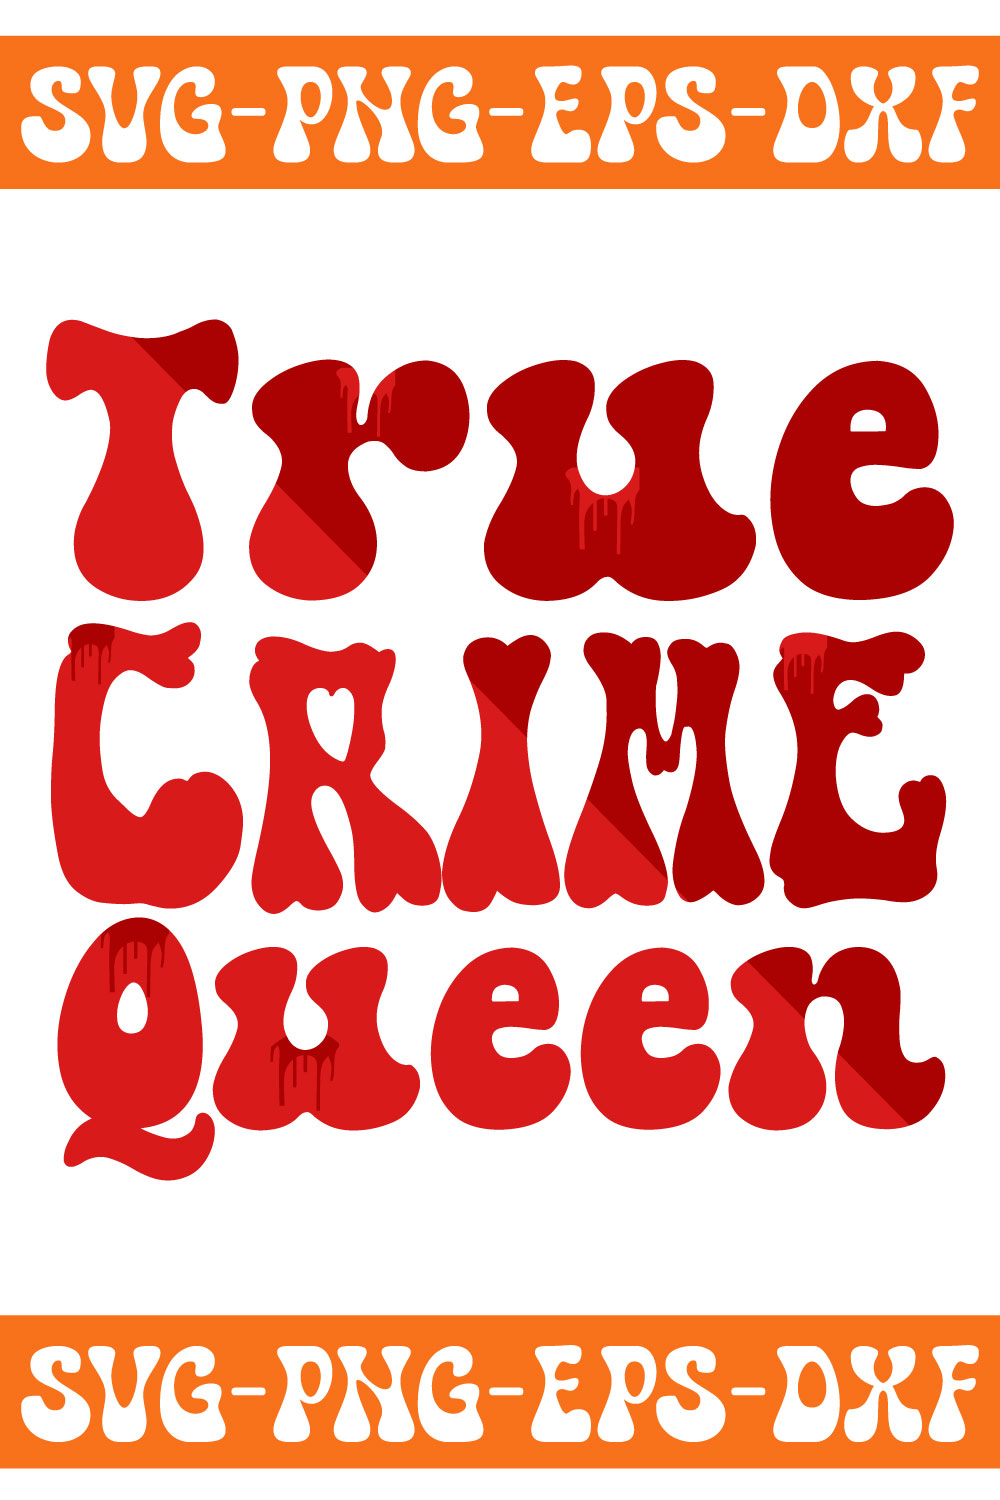 True-Crime Retro Svg pinterest preview image.